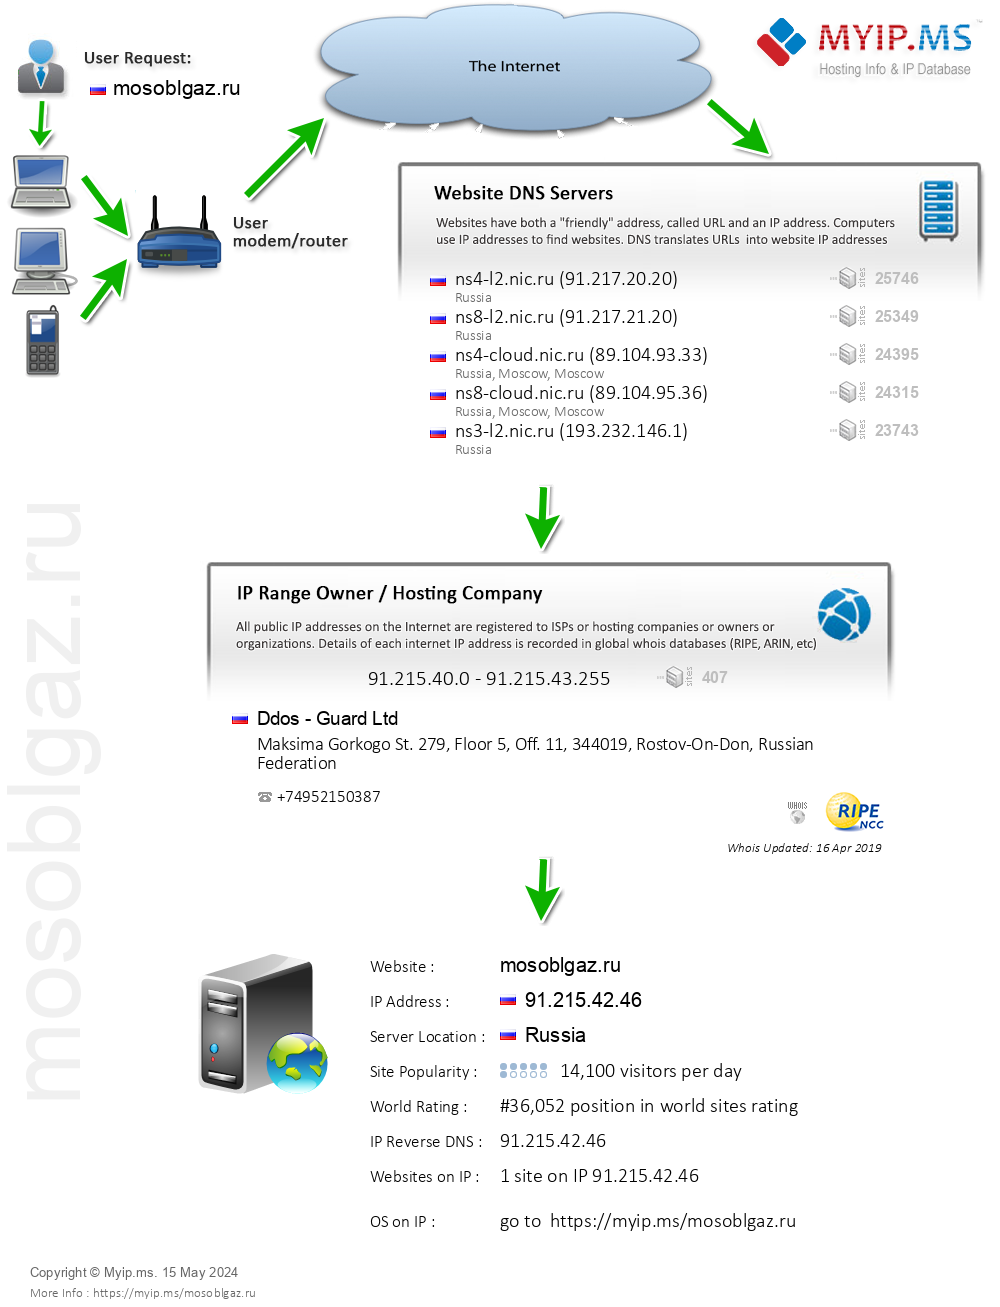 Mosoblgaz.ru - Website Hosting Visual IP Diagram